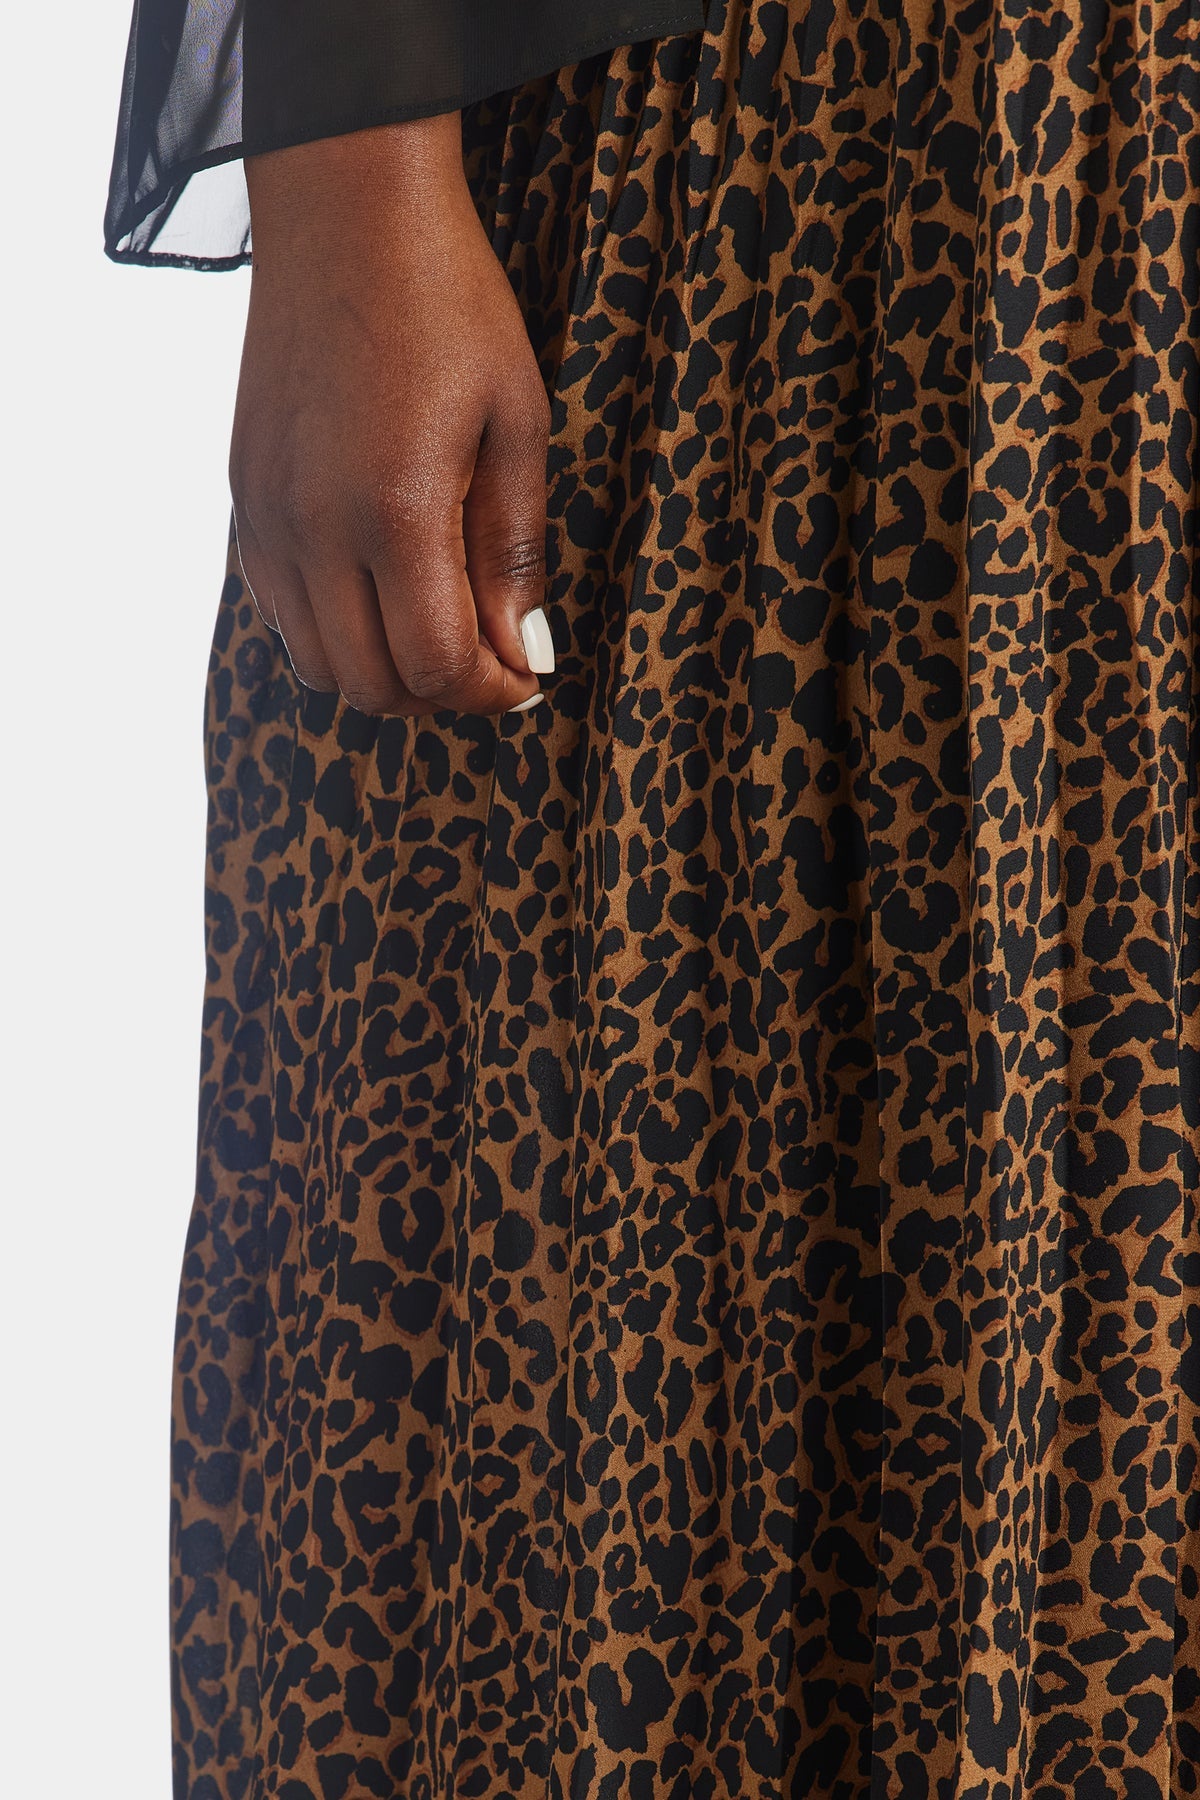 Cheetah Pleated Skirt